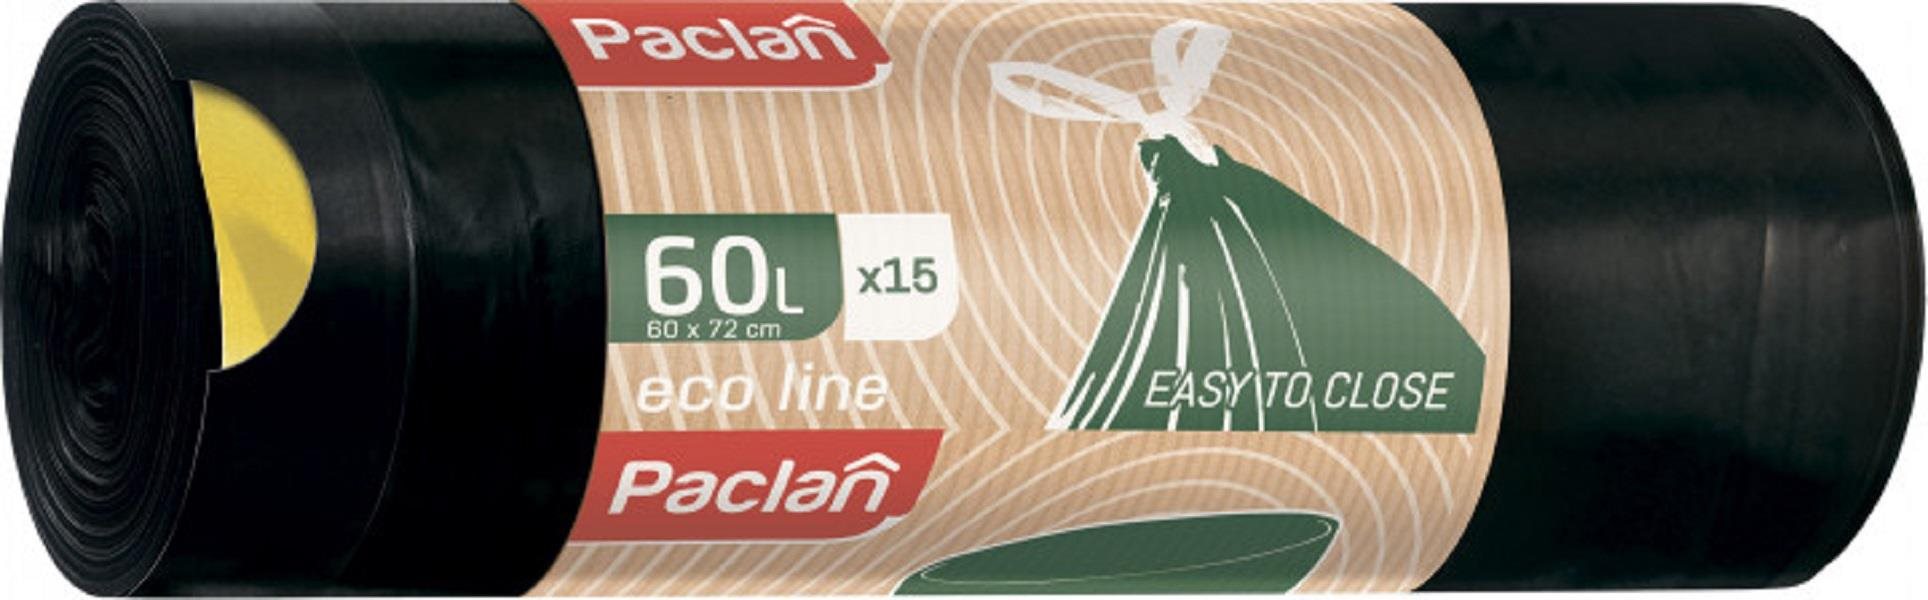 PACLAN Eco Line behúzható 60 l, 15 db, 25MY